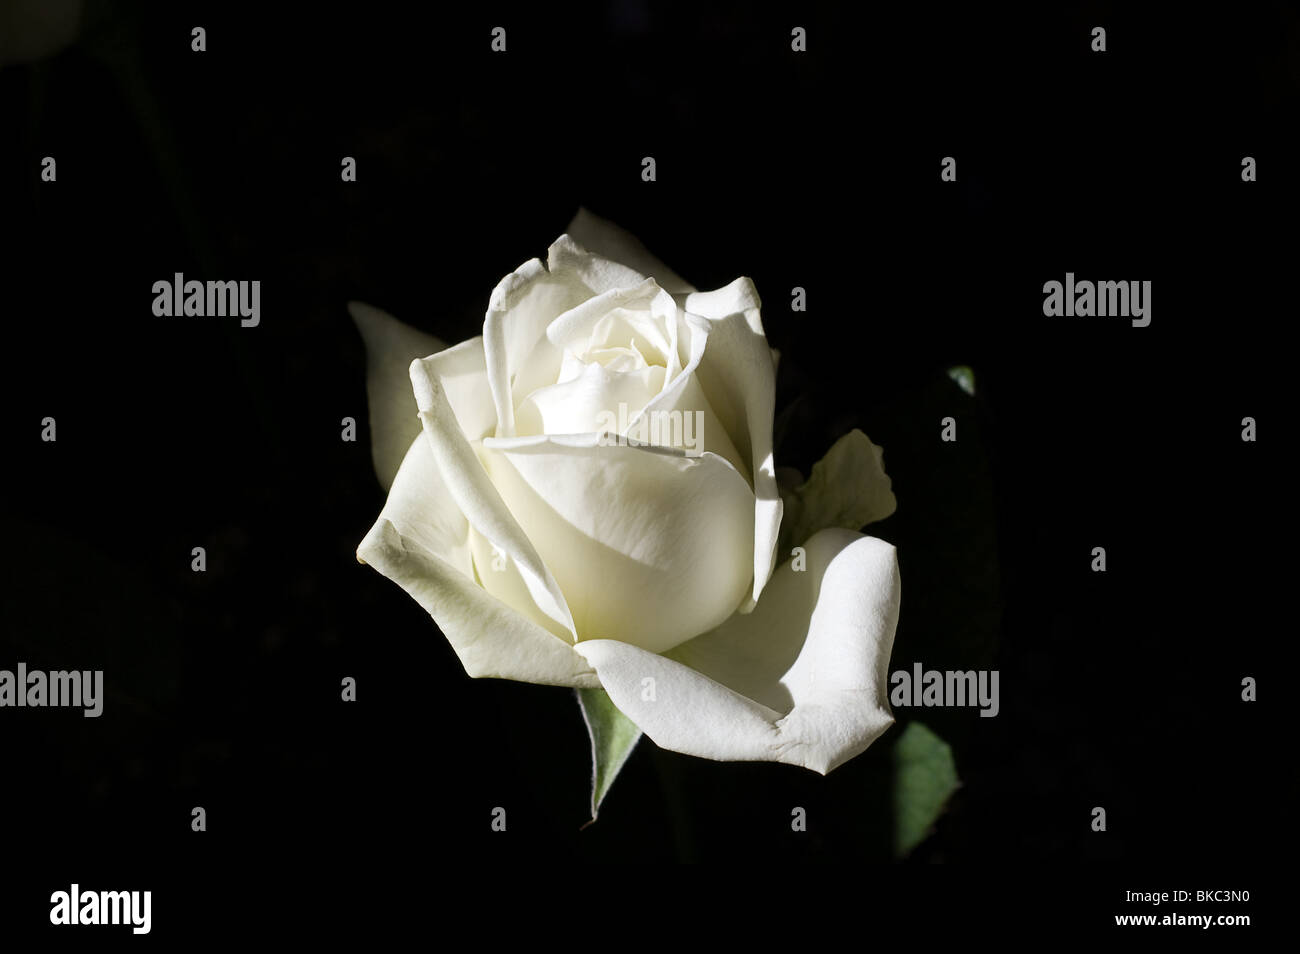 white shining rose on a dark background Stock Photo